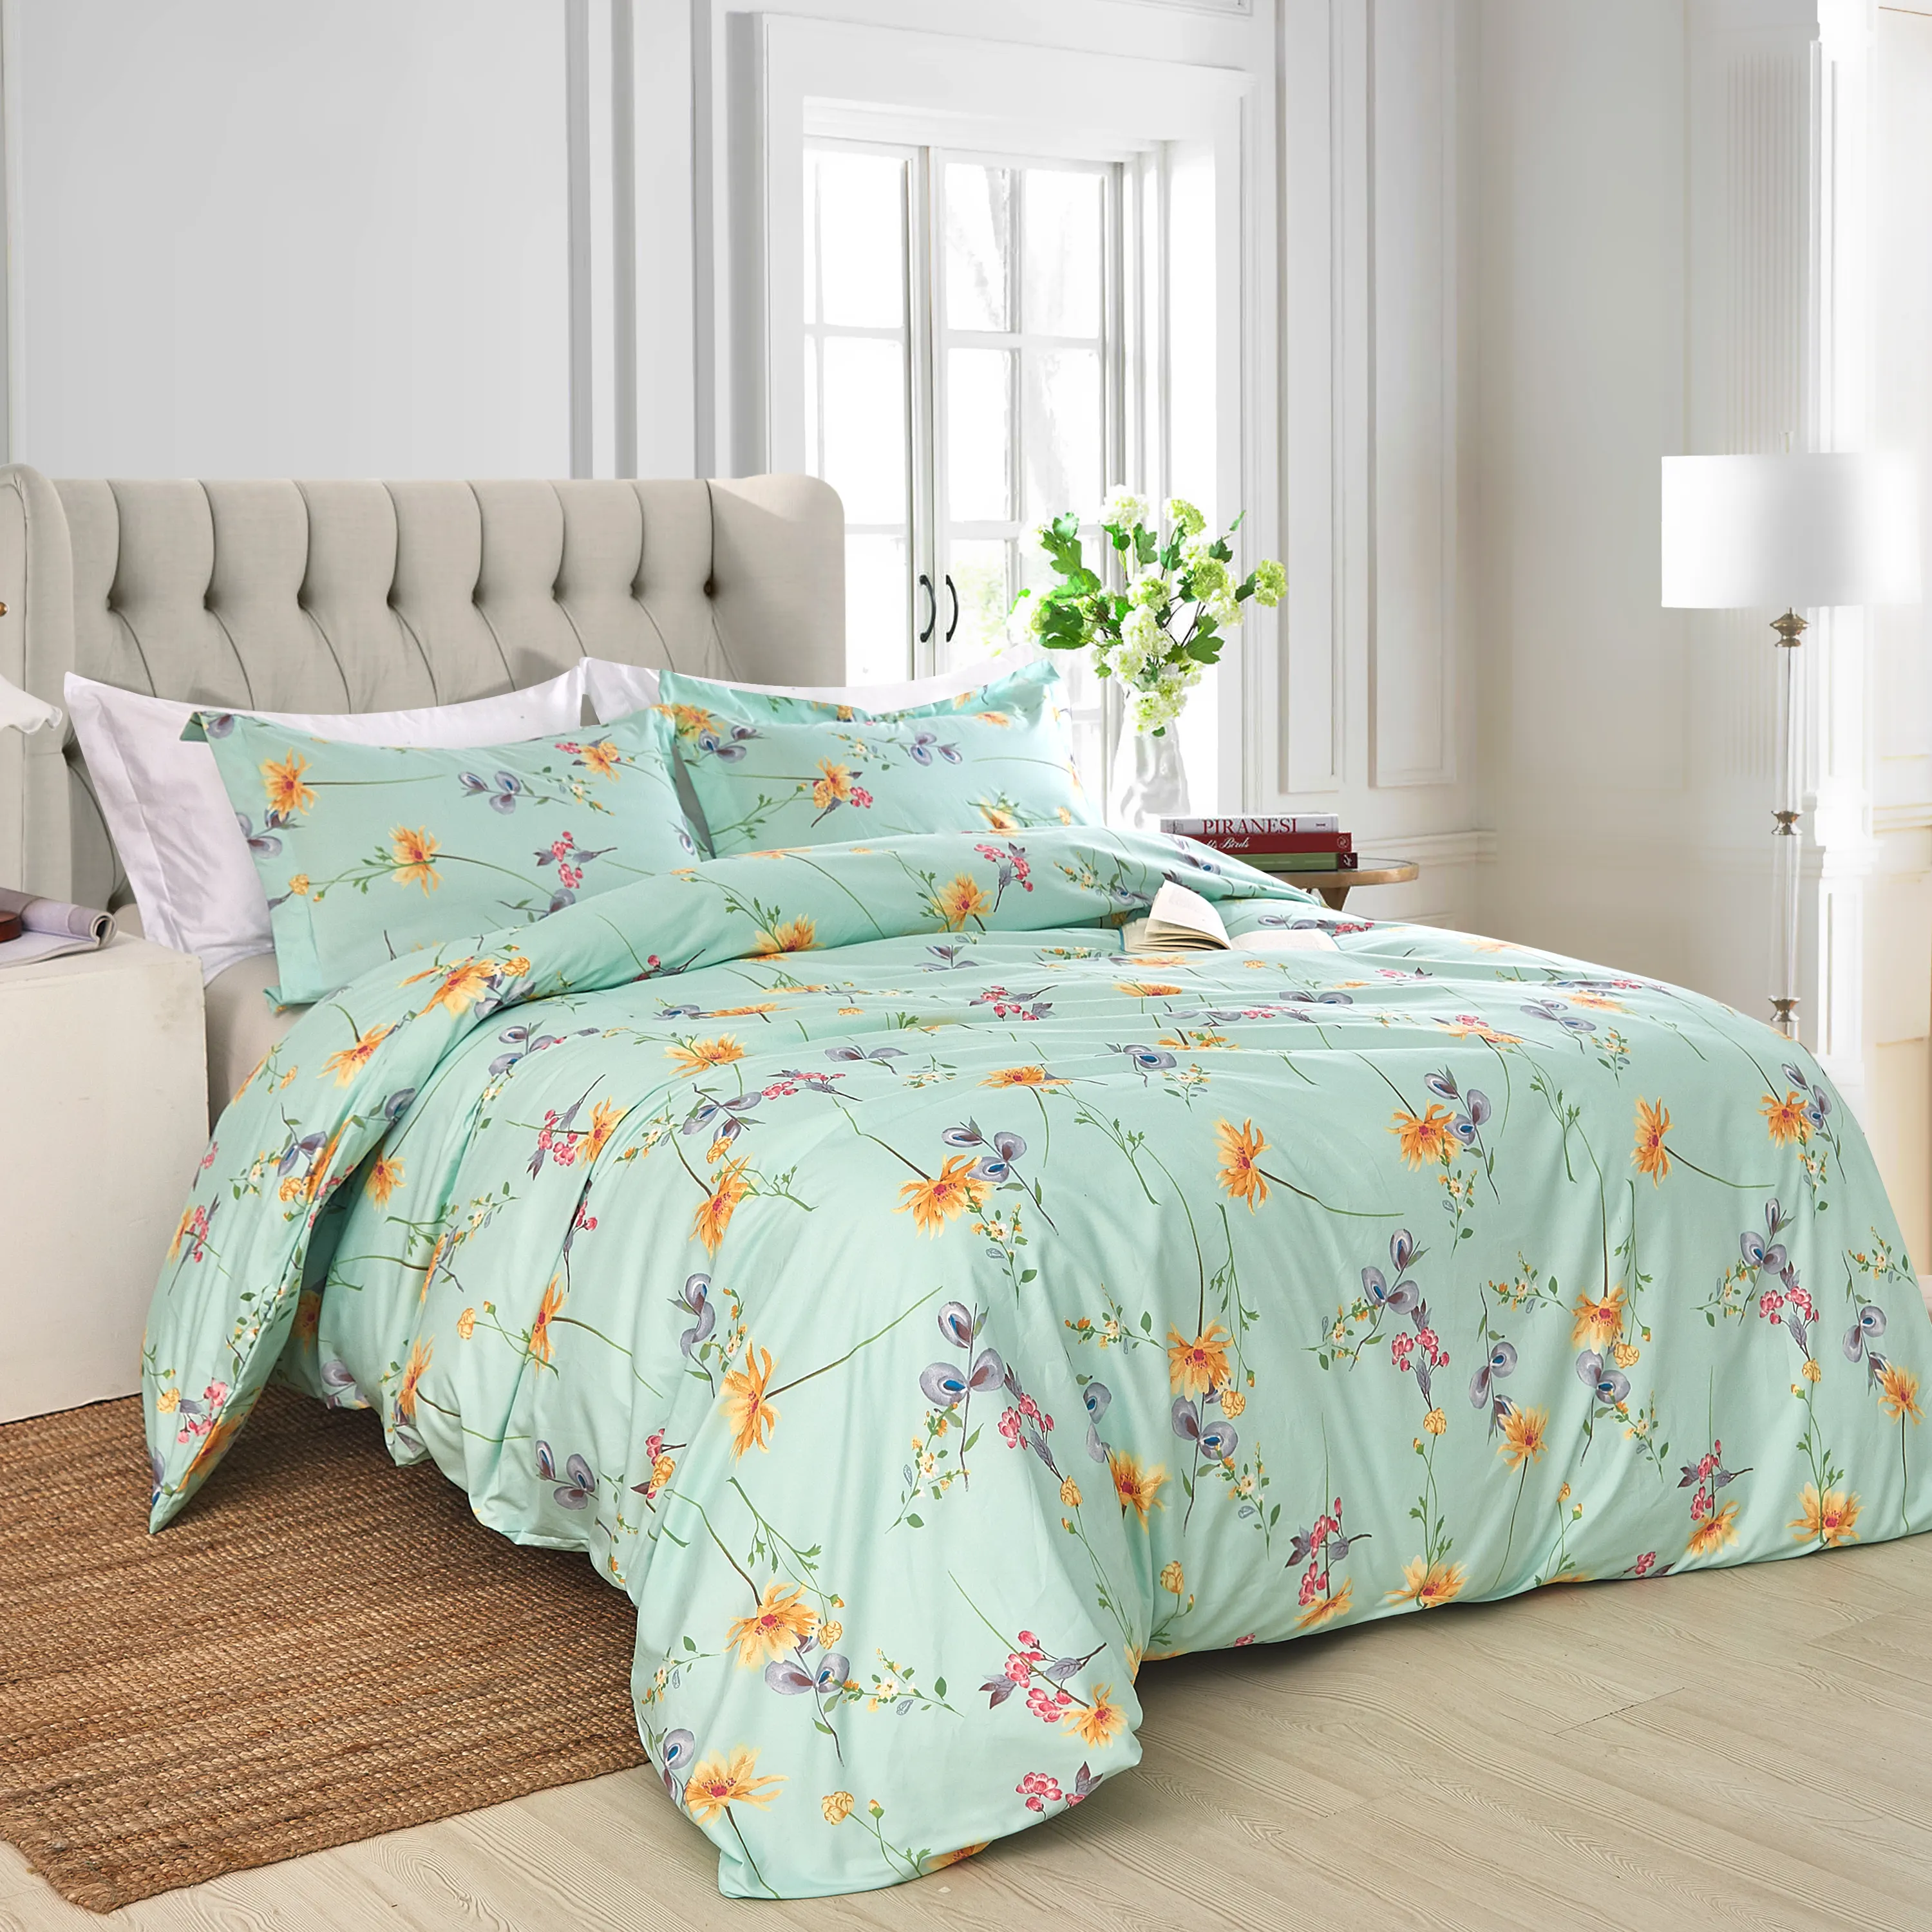 Floral Duvet Cover Full / Queen Size Soft 100% Brushed Microfiber Comforter Cover 3 Piece Bedding Set 1 Duvet Cover & 2 Pillow